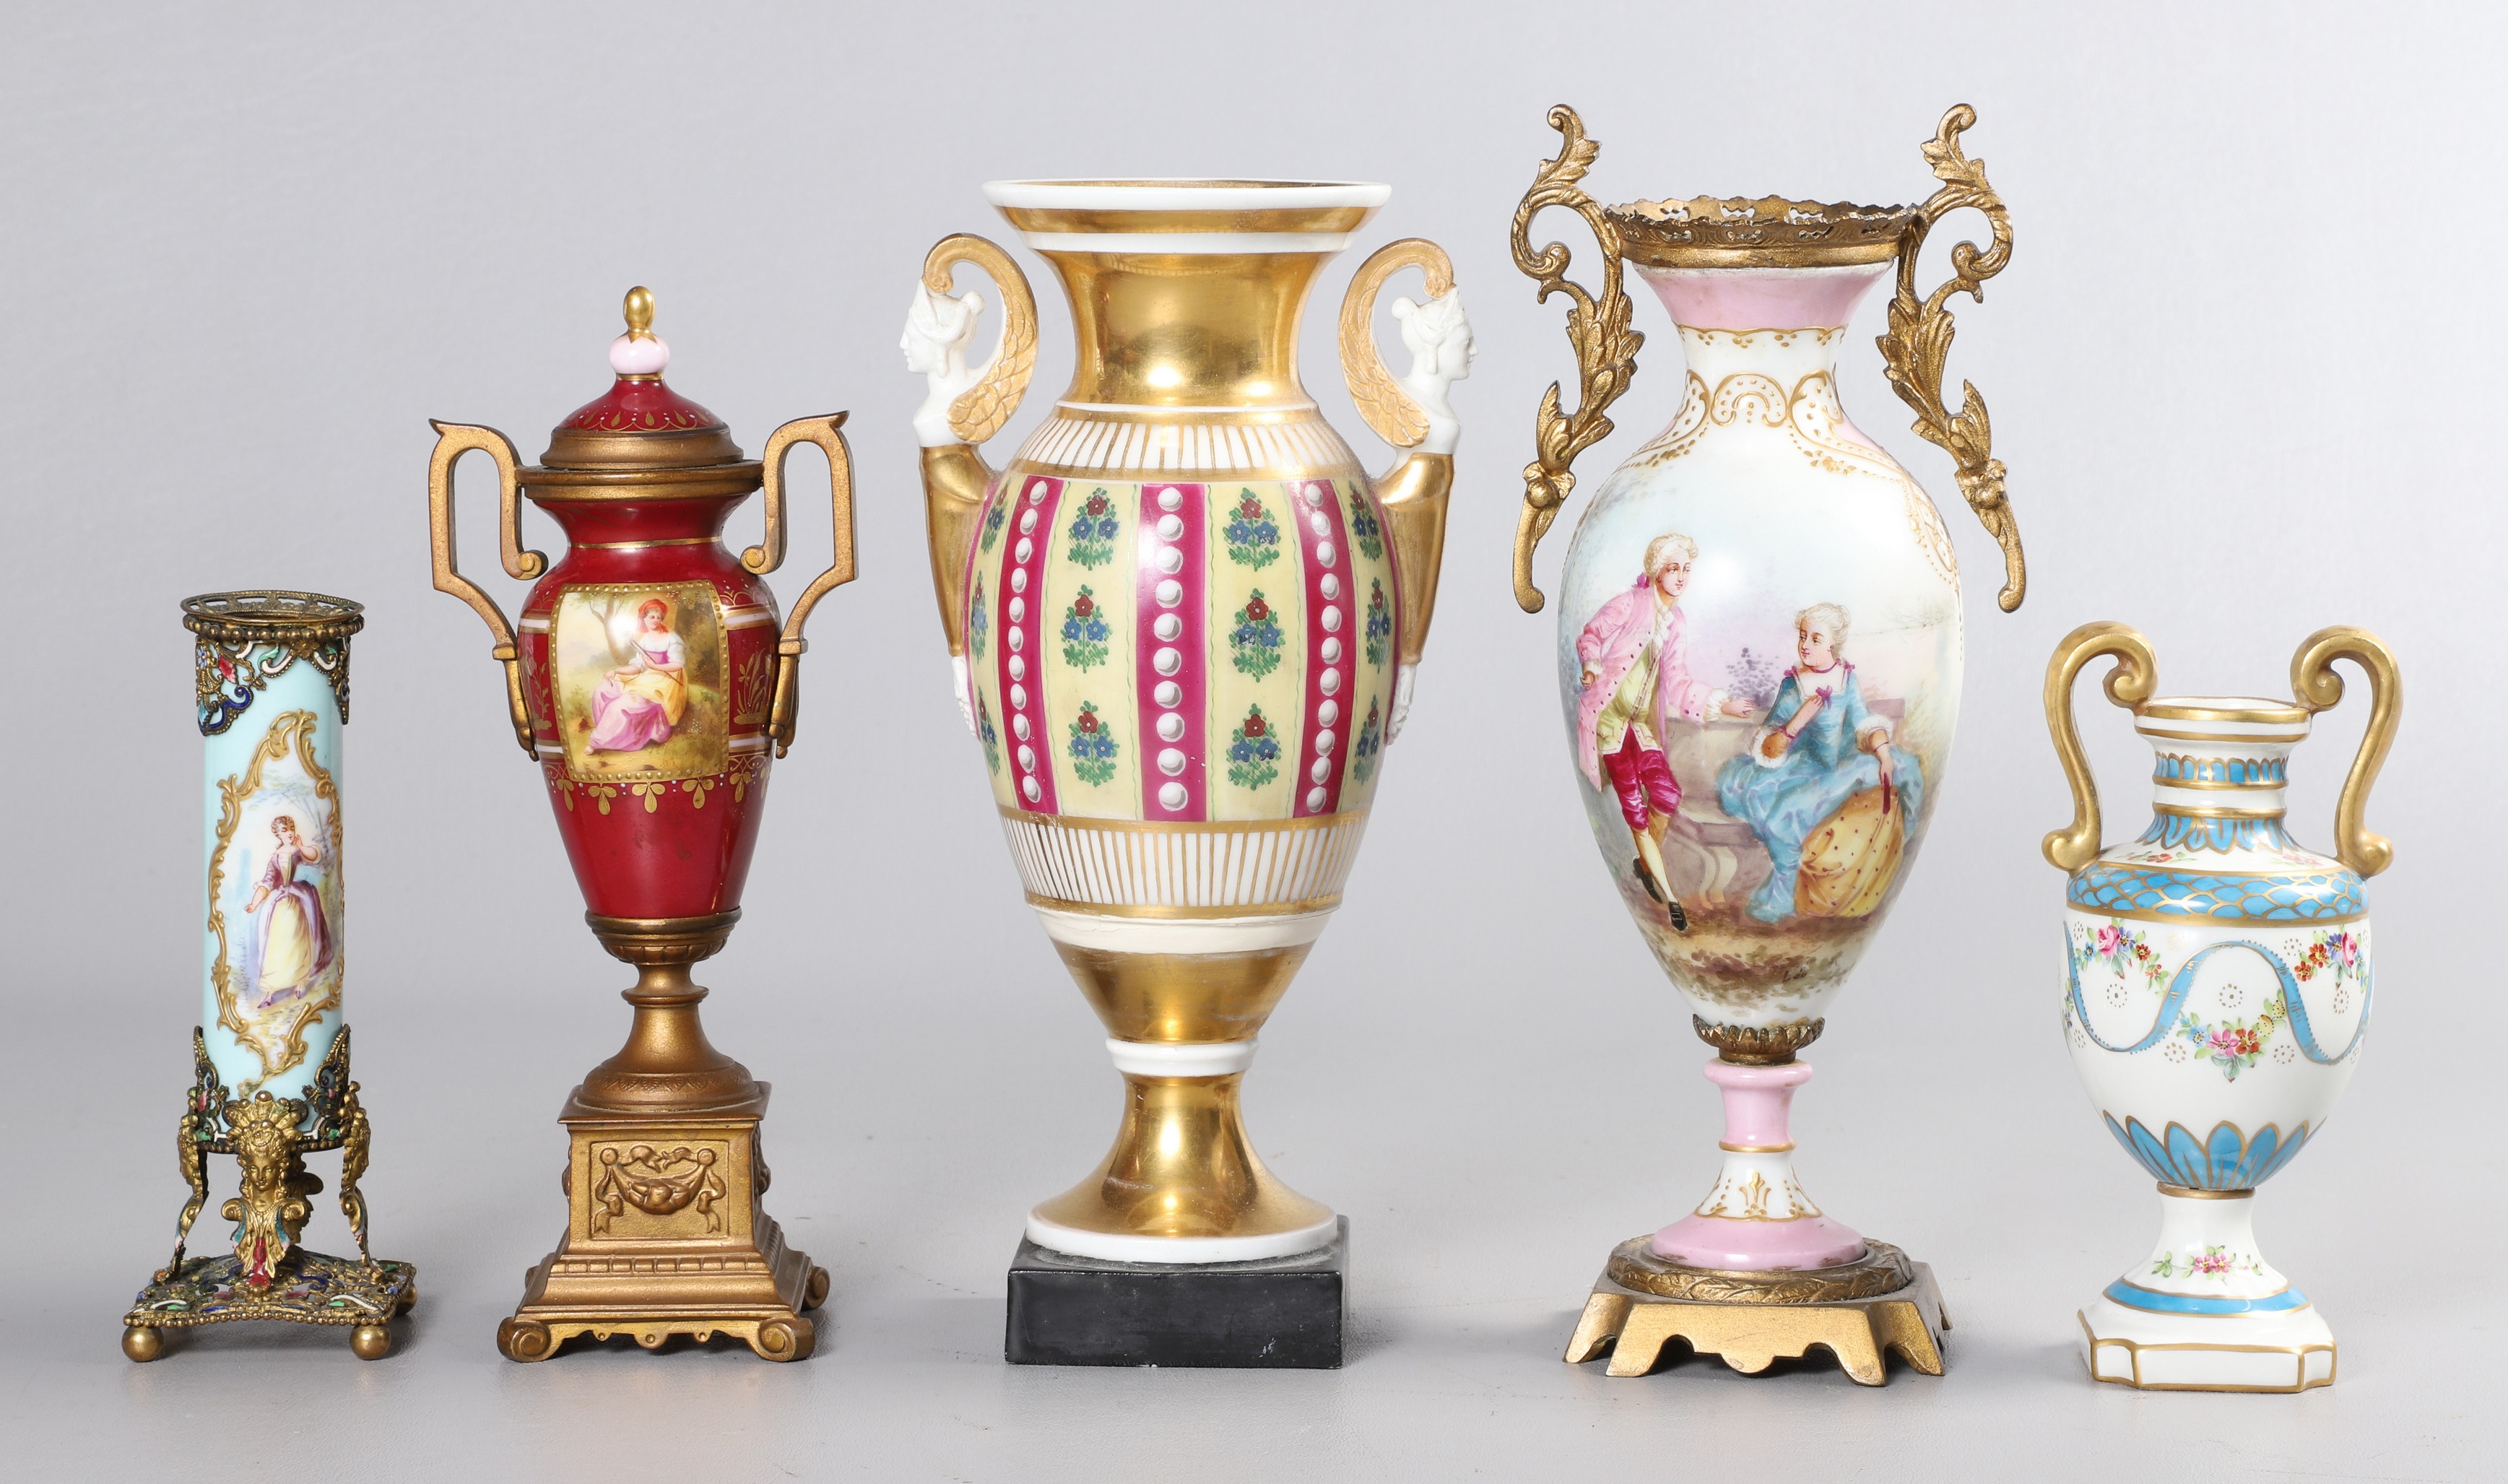  5 Porcelain urns and vase to 2e07ea